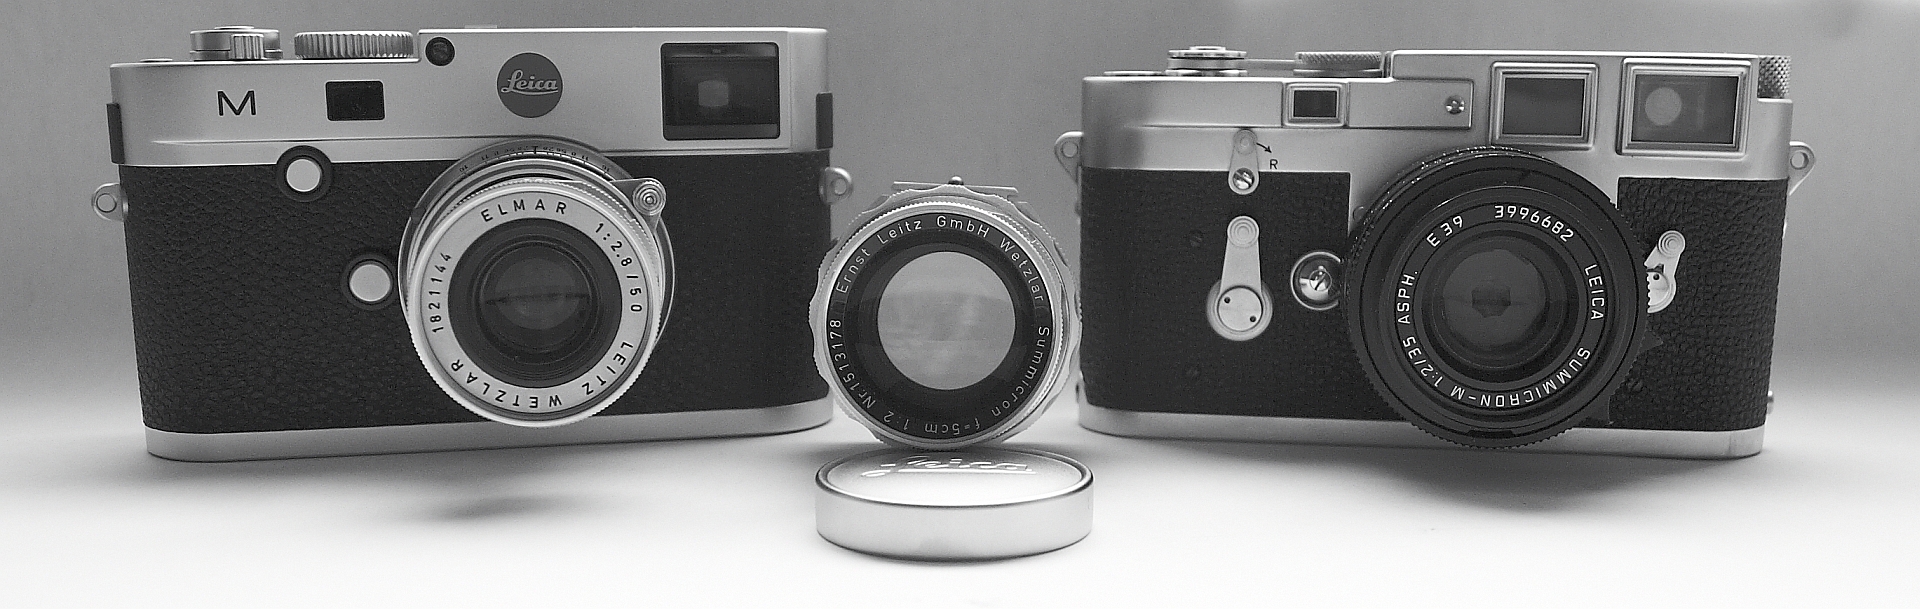 Leica M 240 und Leica M3